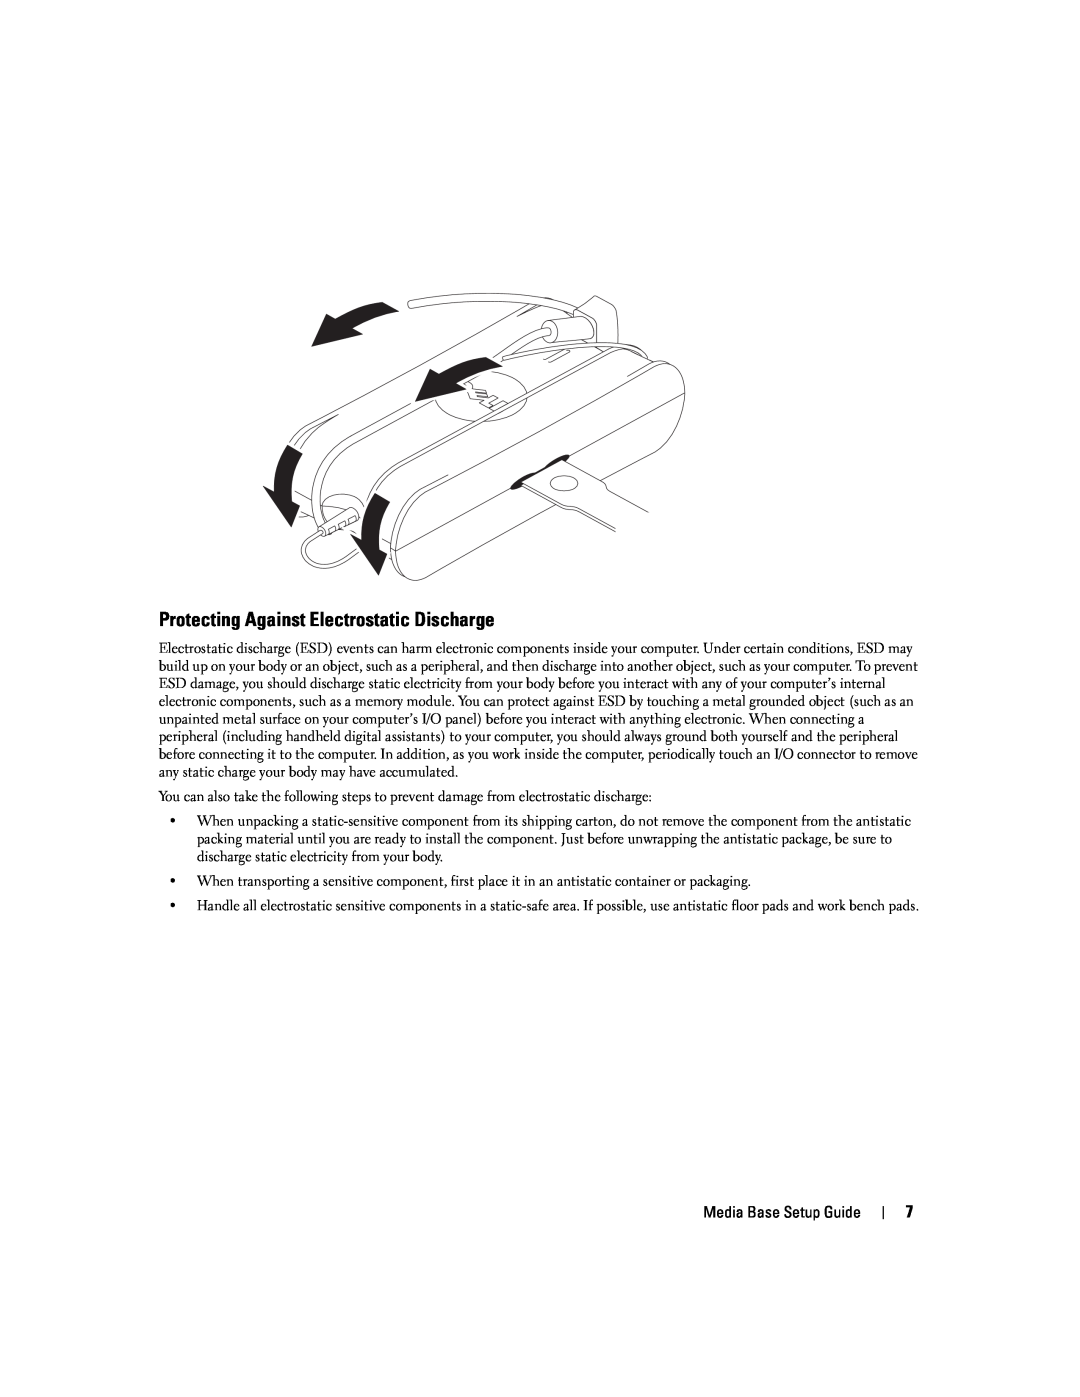 Dell Model PR09S setup guide Protecting Against Electrostatic Discharge 